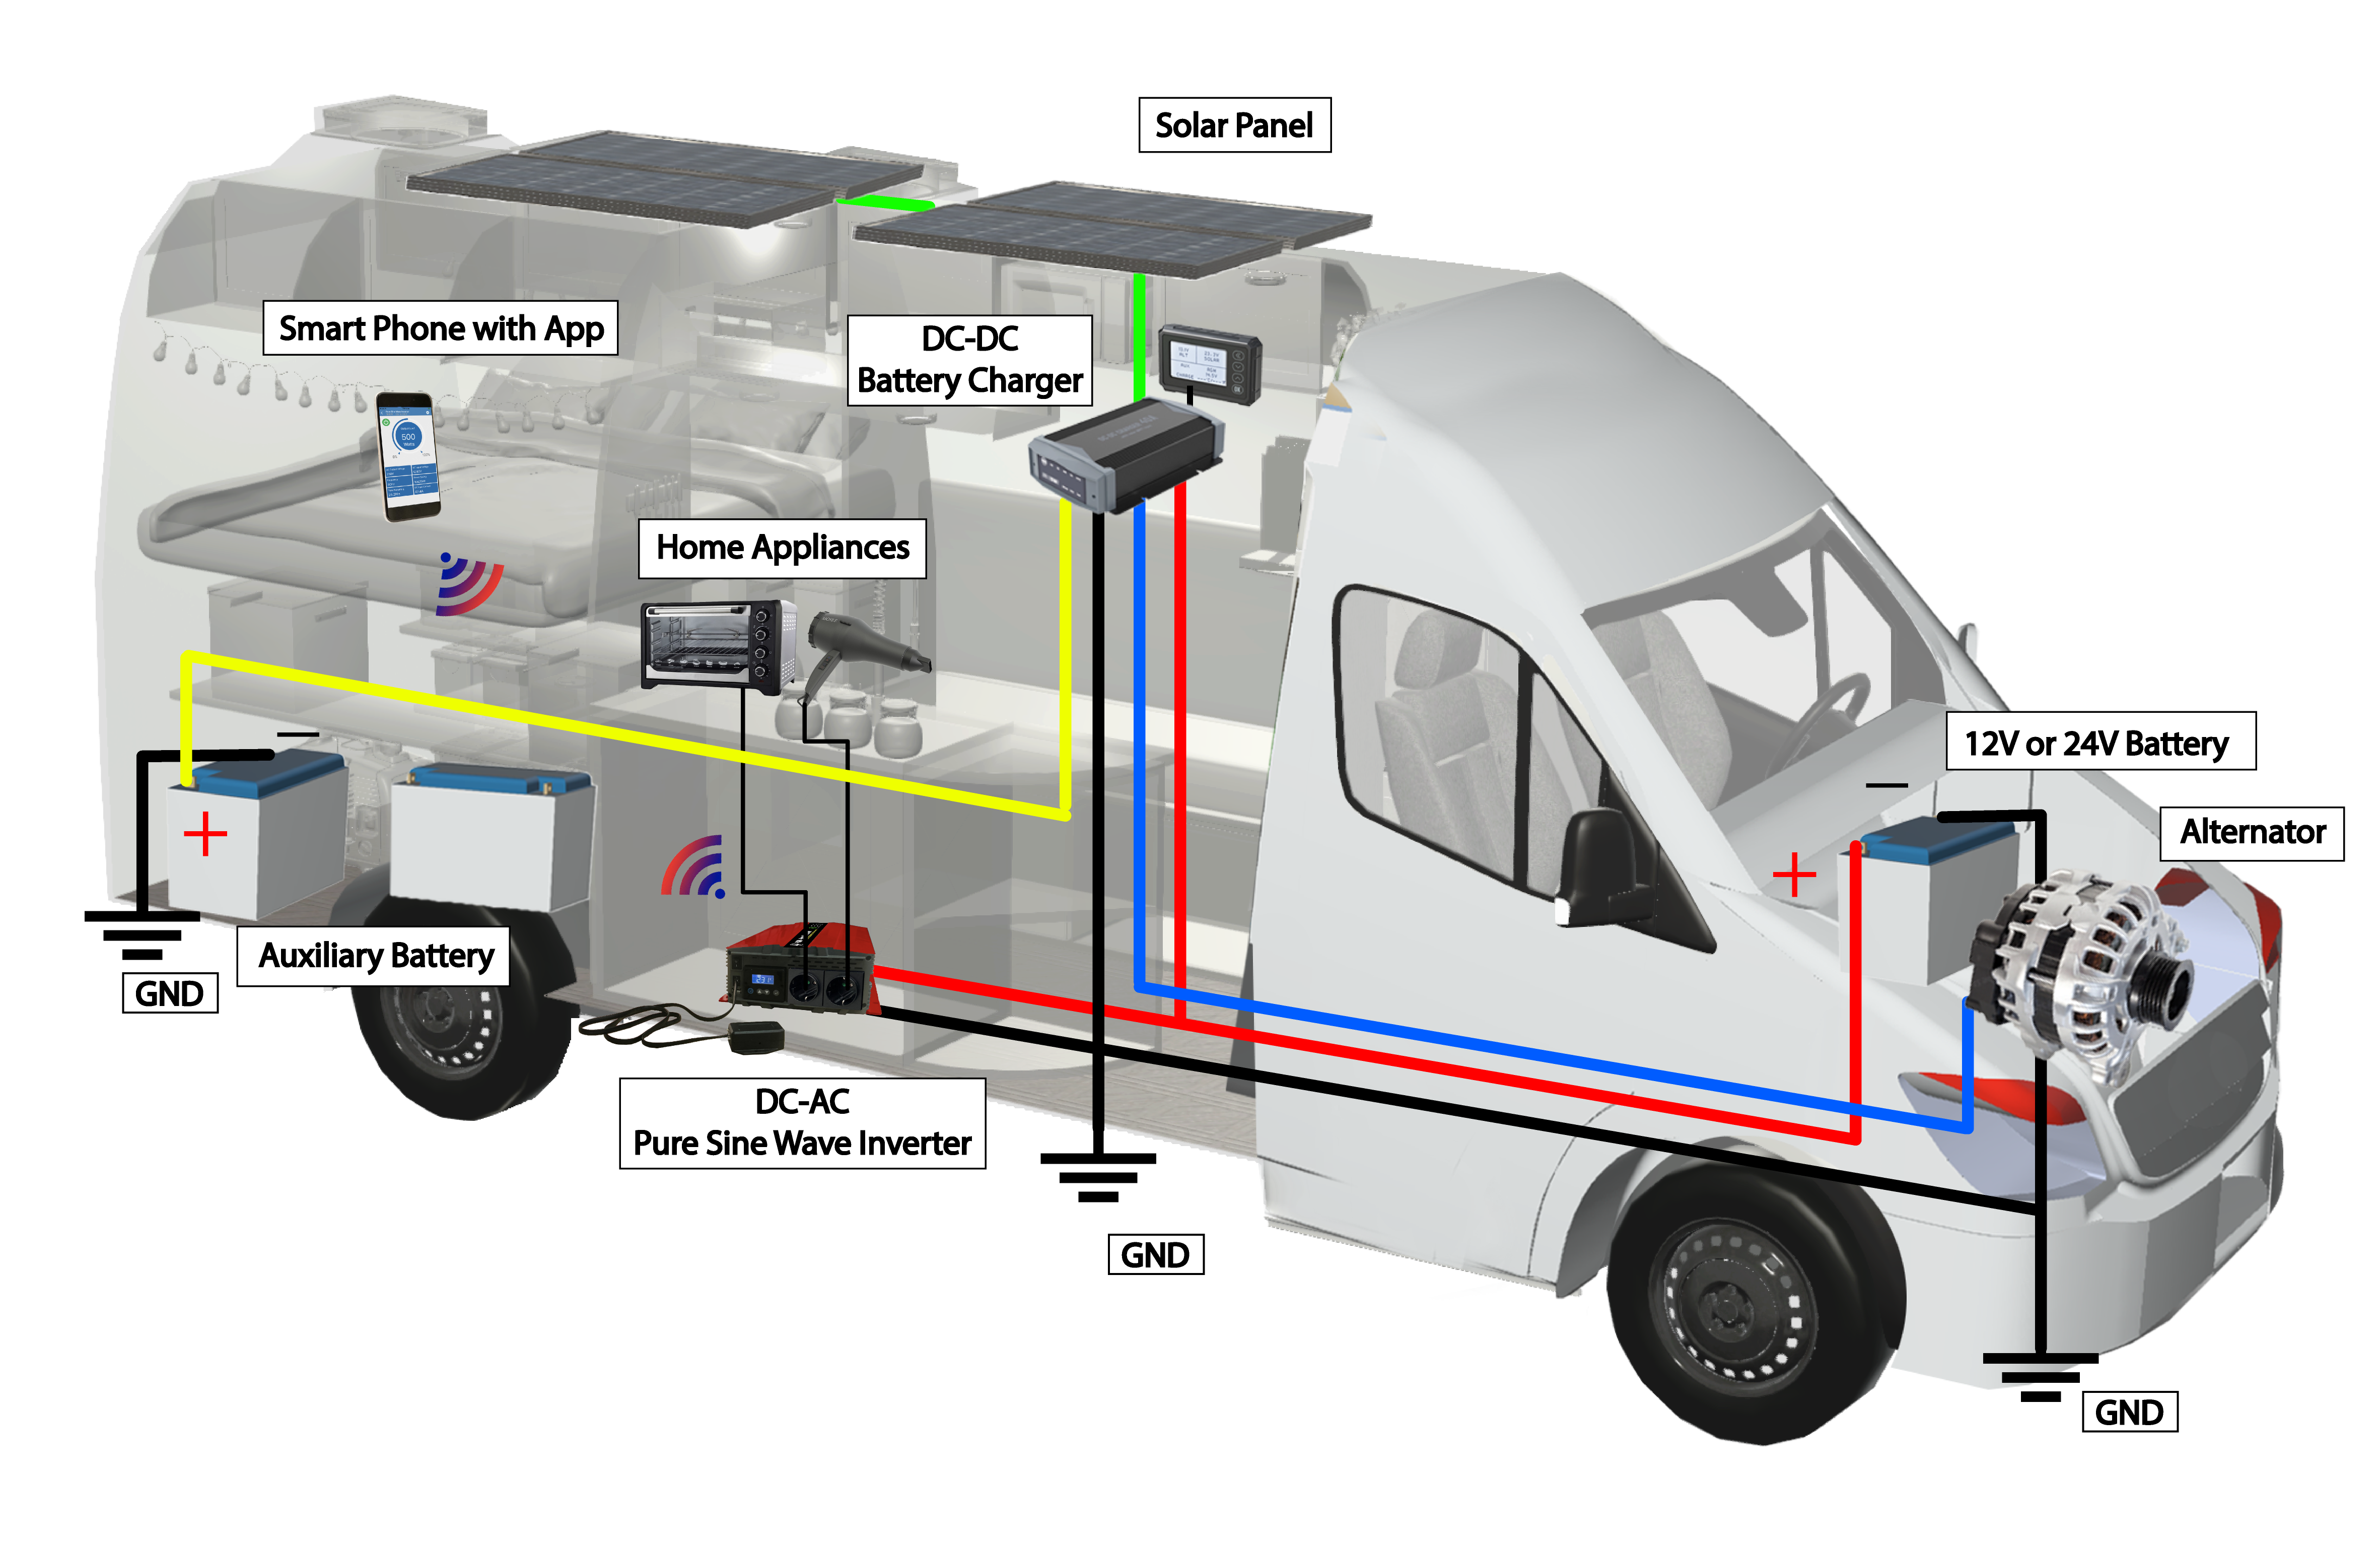 RV Caravan with Converter and Inverter